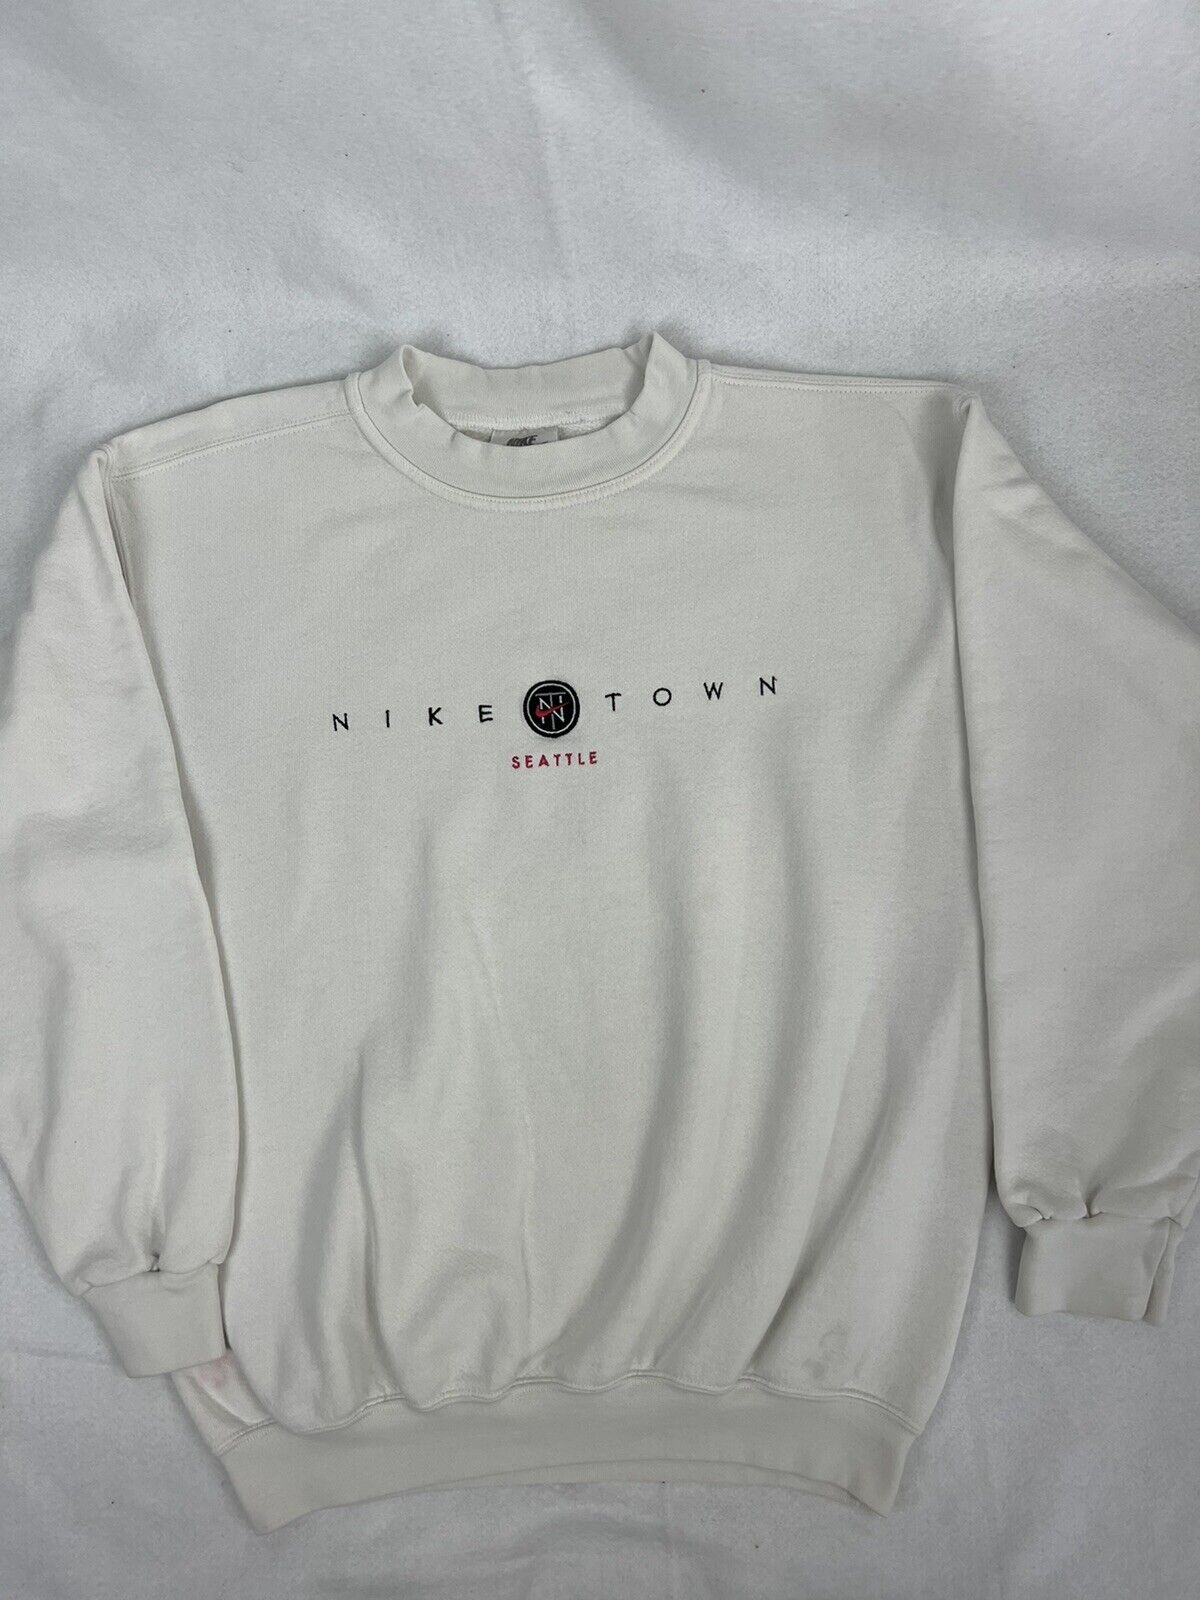 Vintage 90s Nike Town Seattle White Sweatshirt Si… - image 1